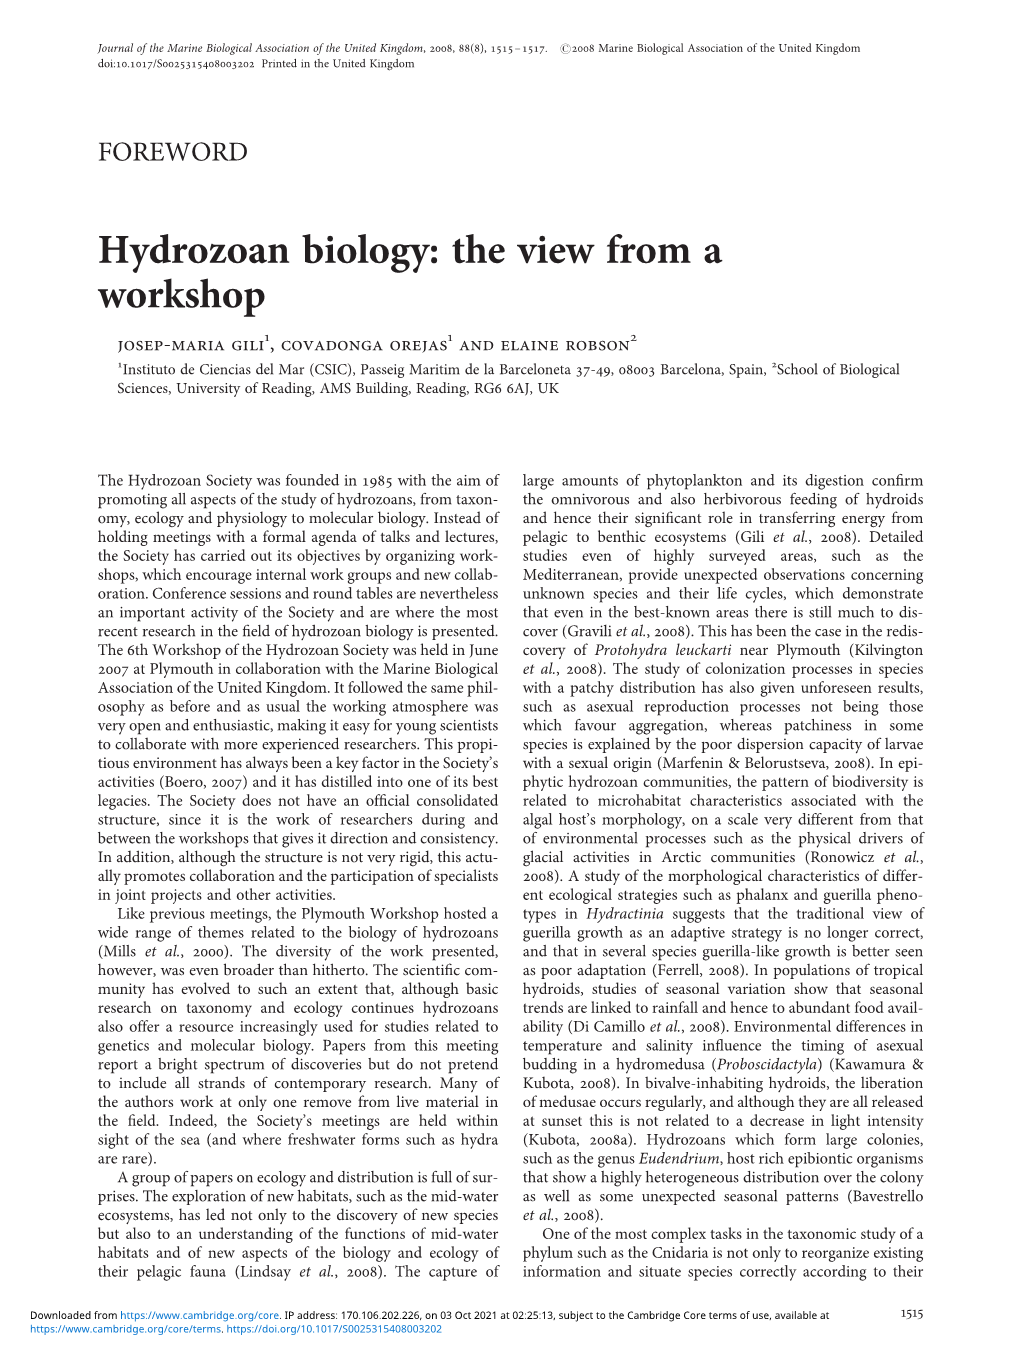 Hydrozoan Biology